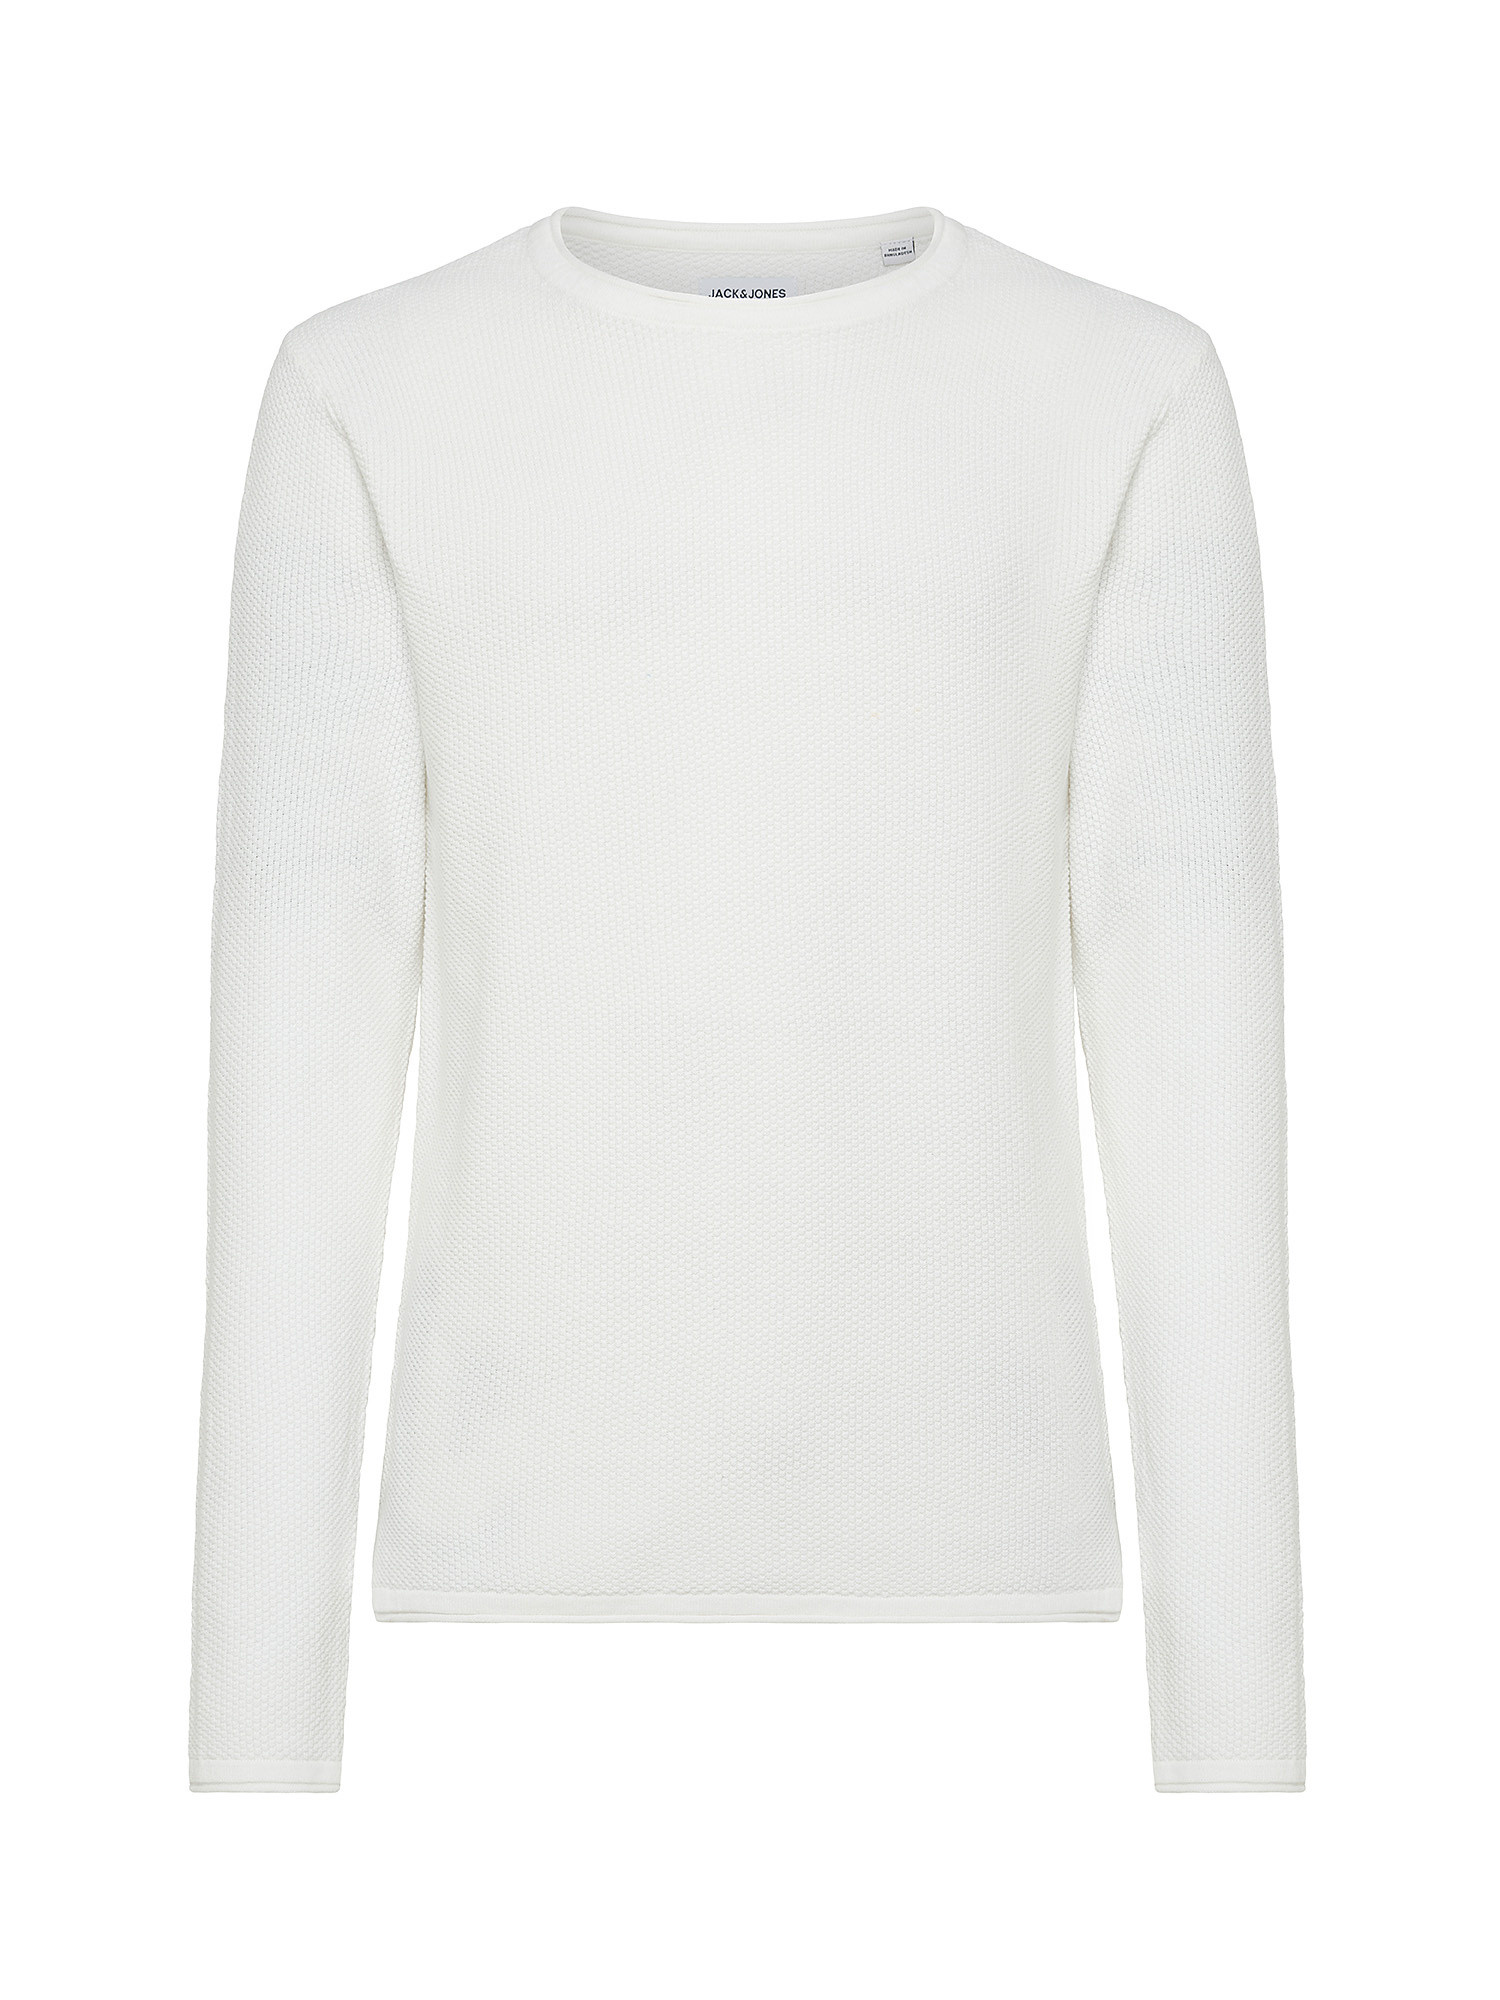 Jack & Jones - Cotton pullover, White, large image number 0